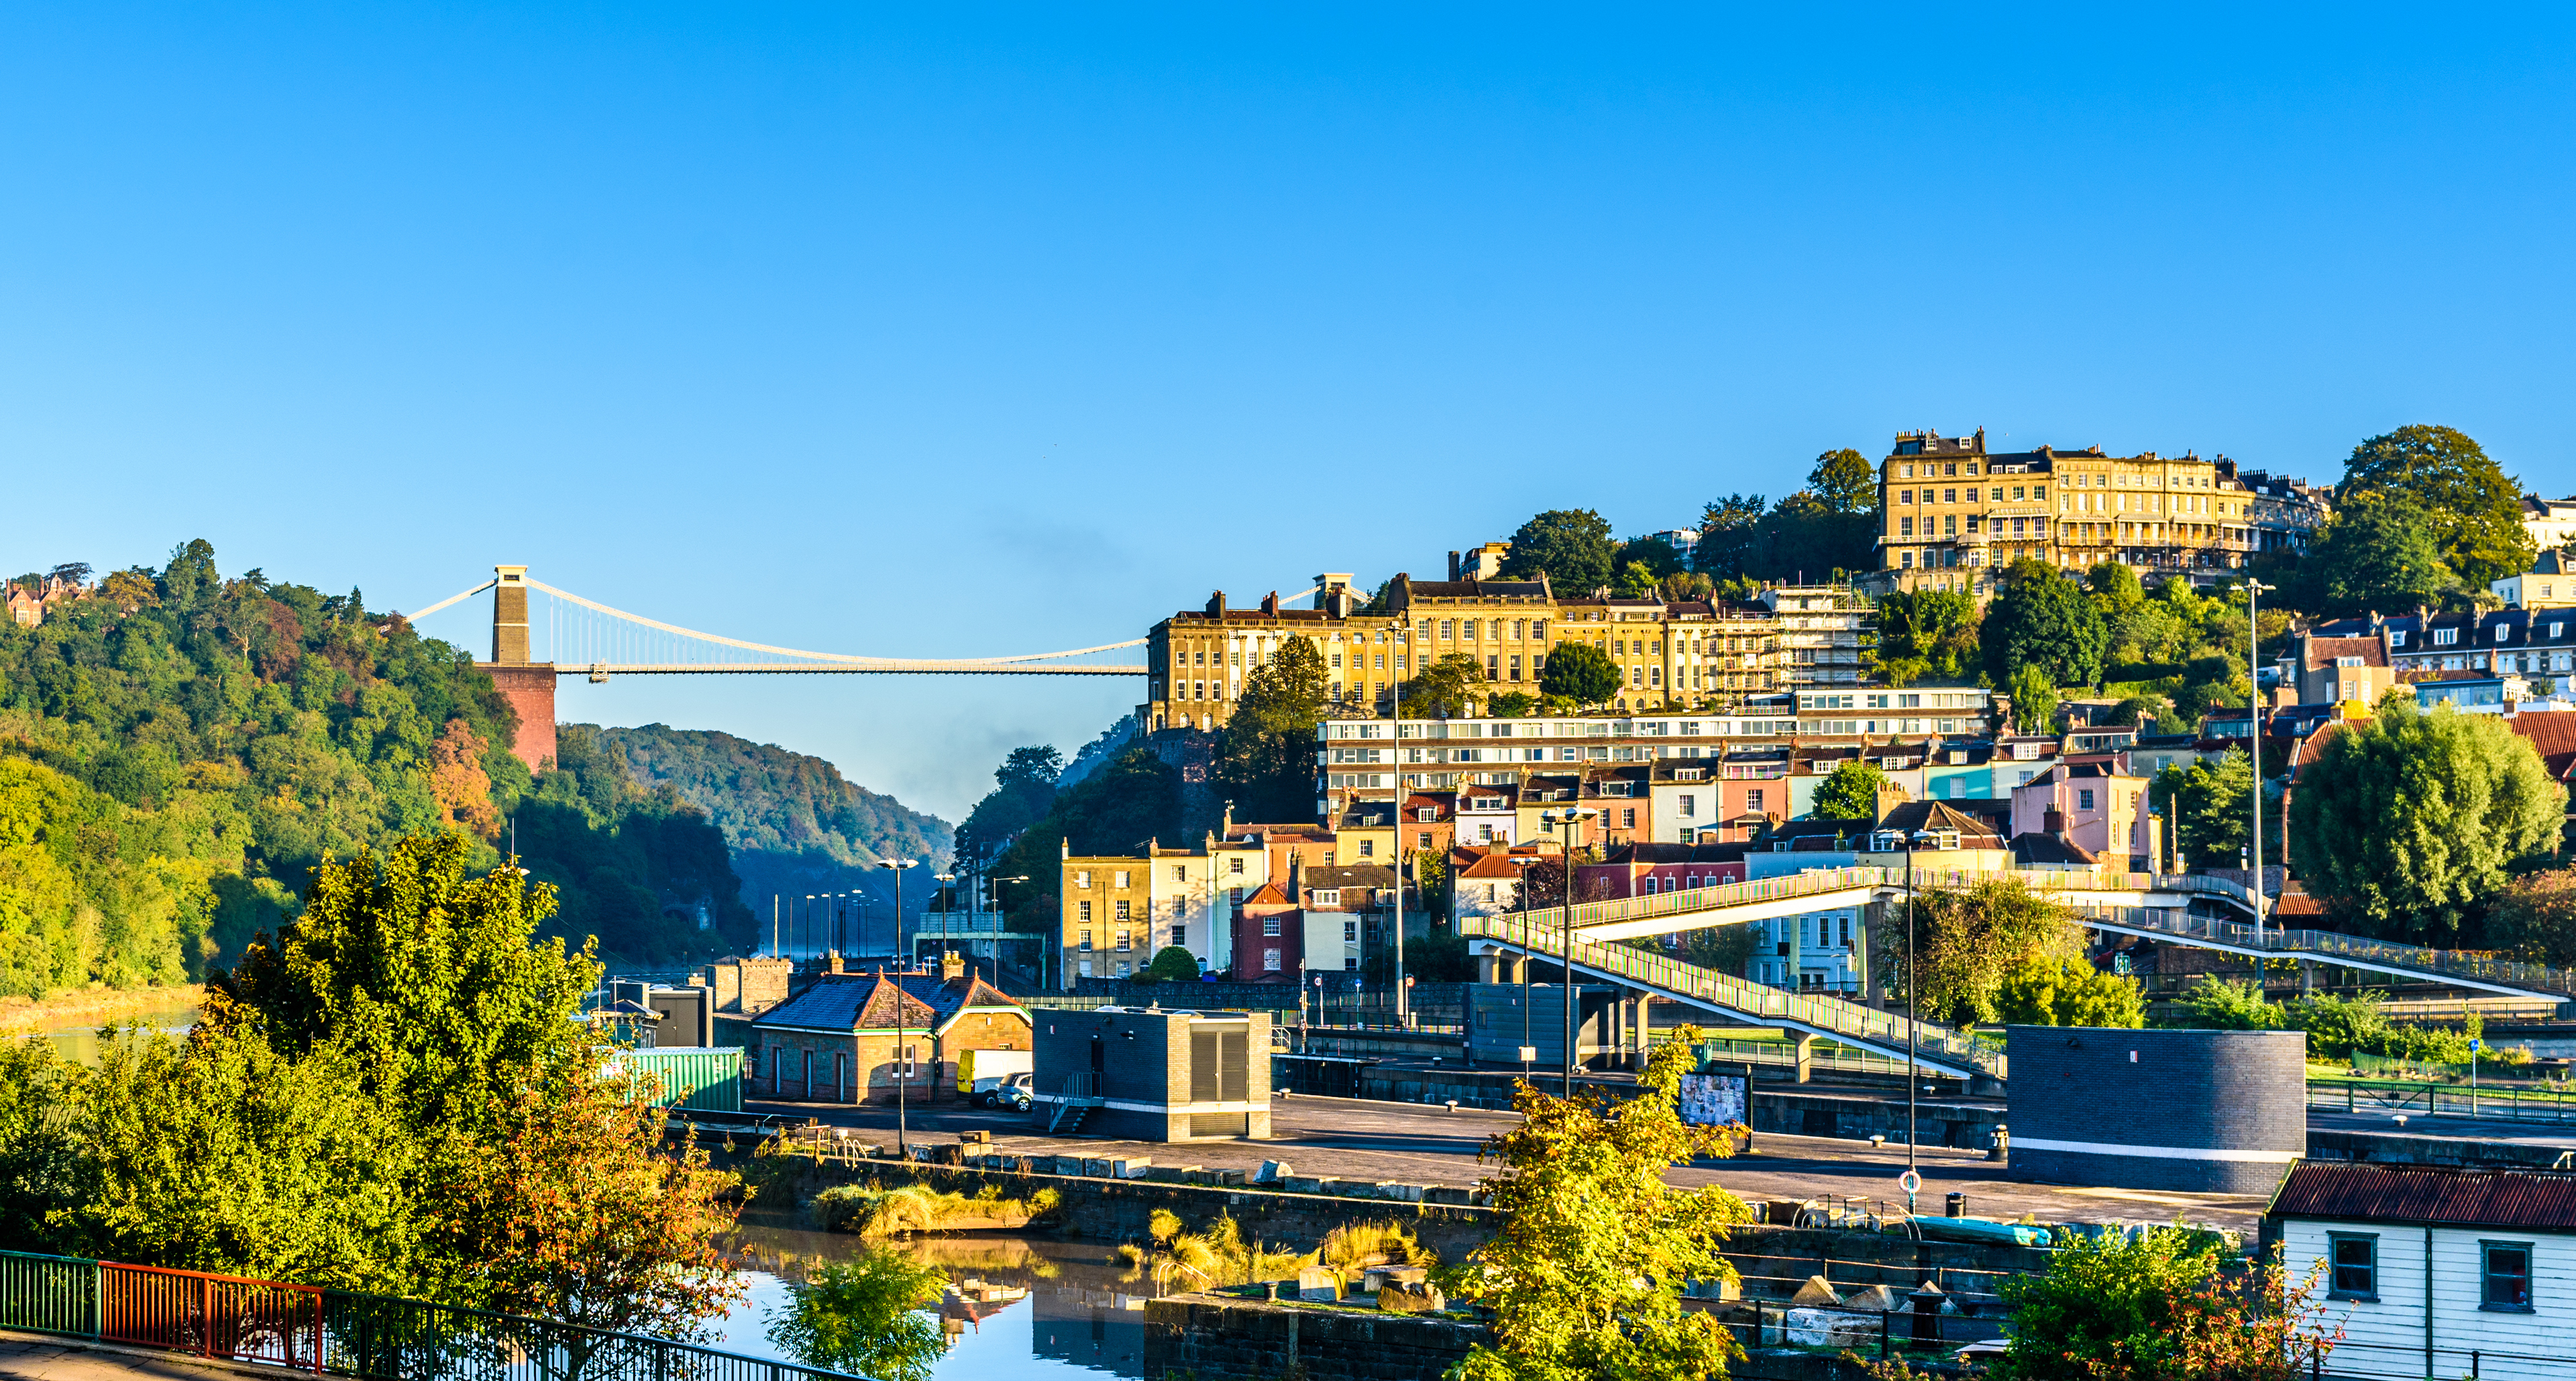 Clifton village and suspension bridge in Bristol (Getty Images/iStock)